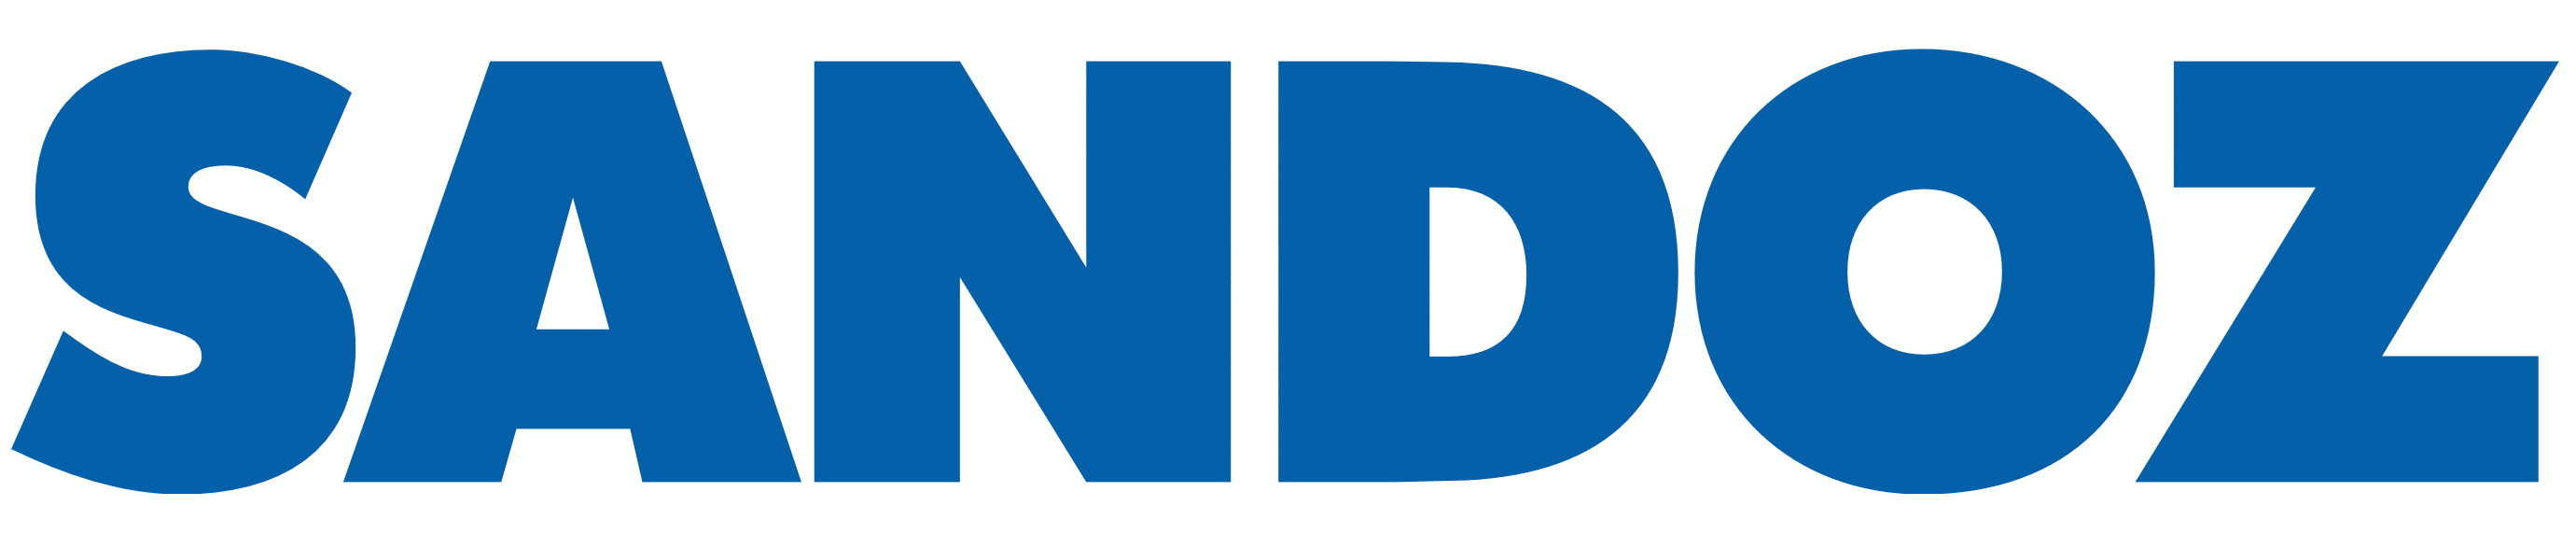 Sandoz logo, logotype